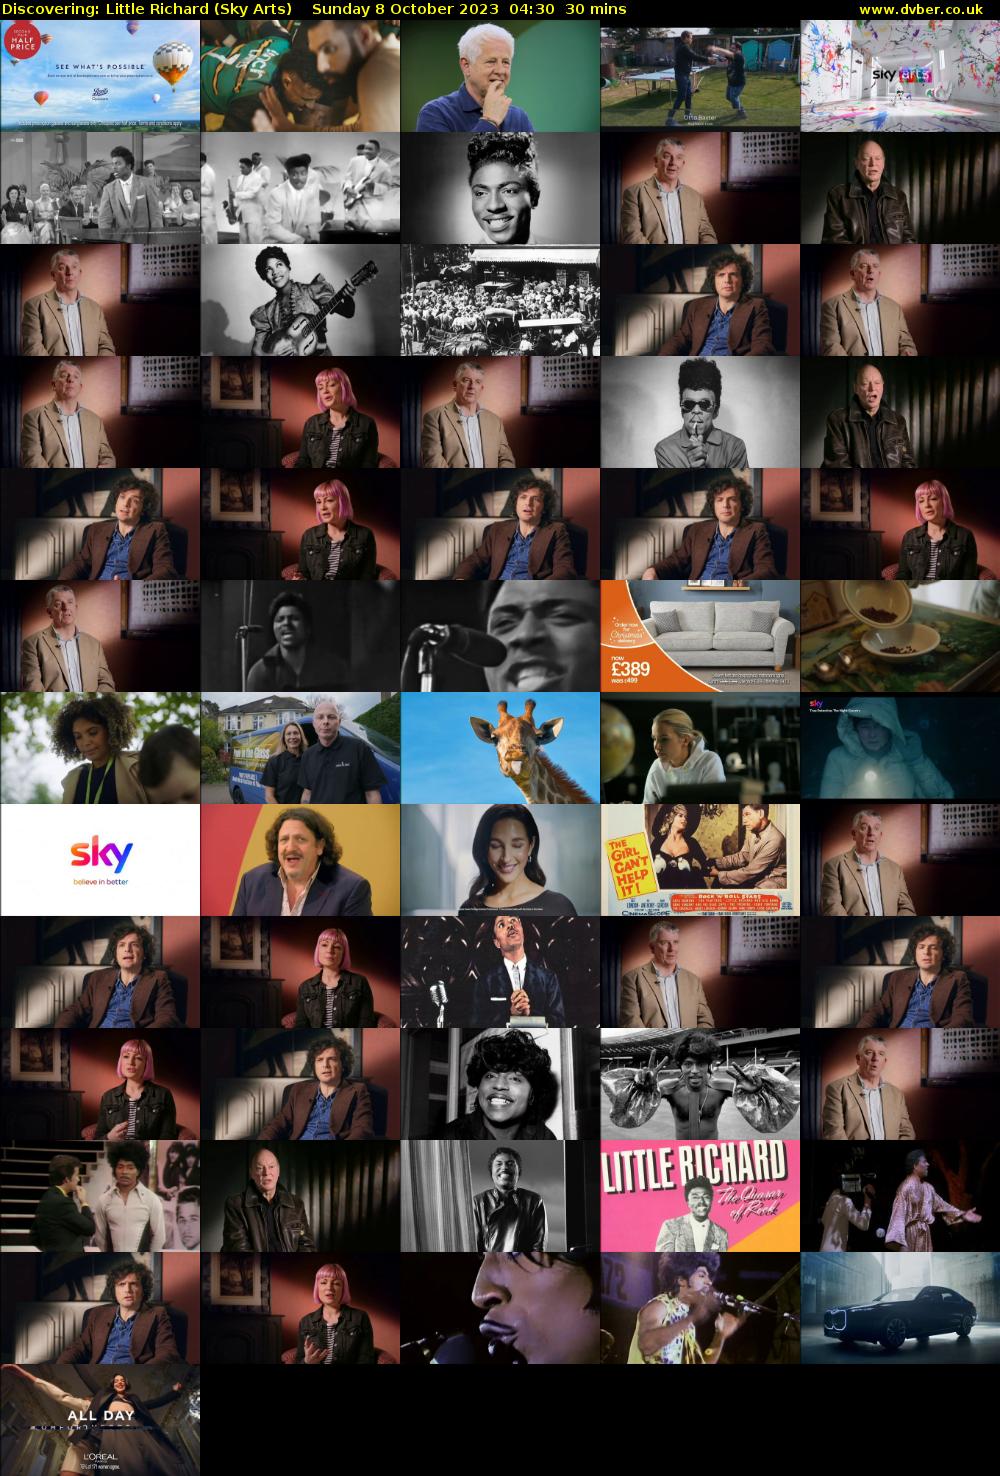 Discovering: Little Richard (Sky Arts) Sunday 8 October 2023 04:30 - 05:00